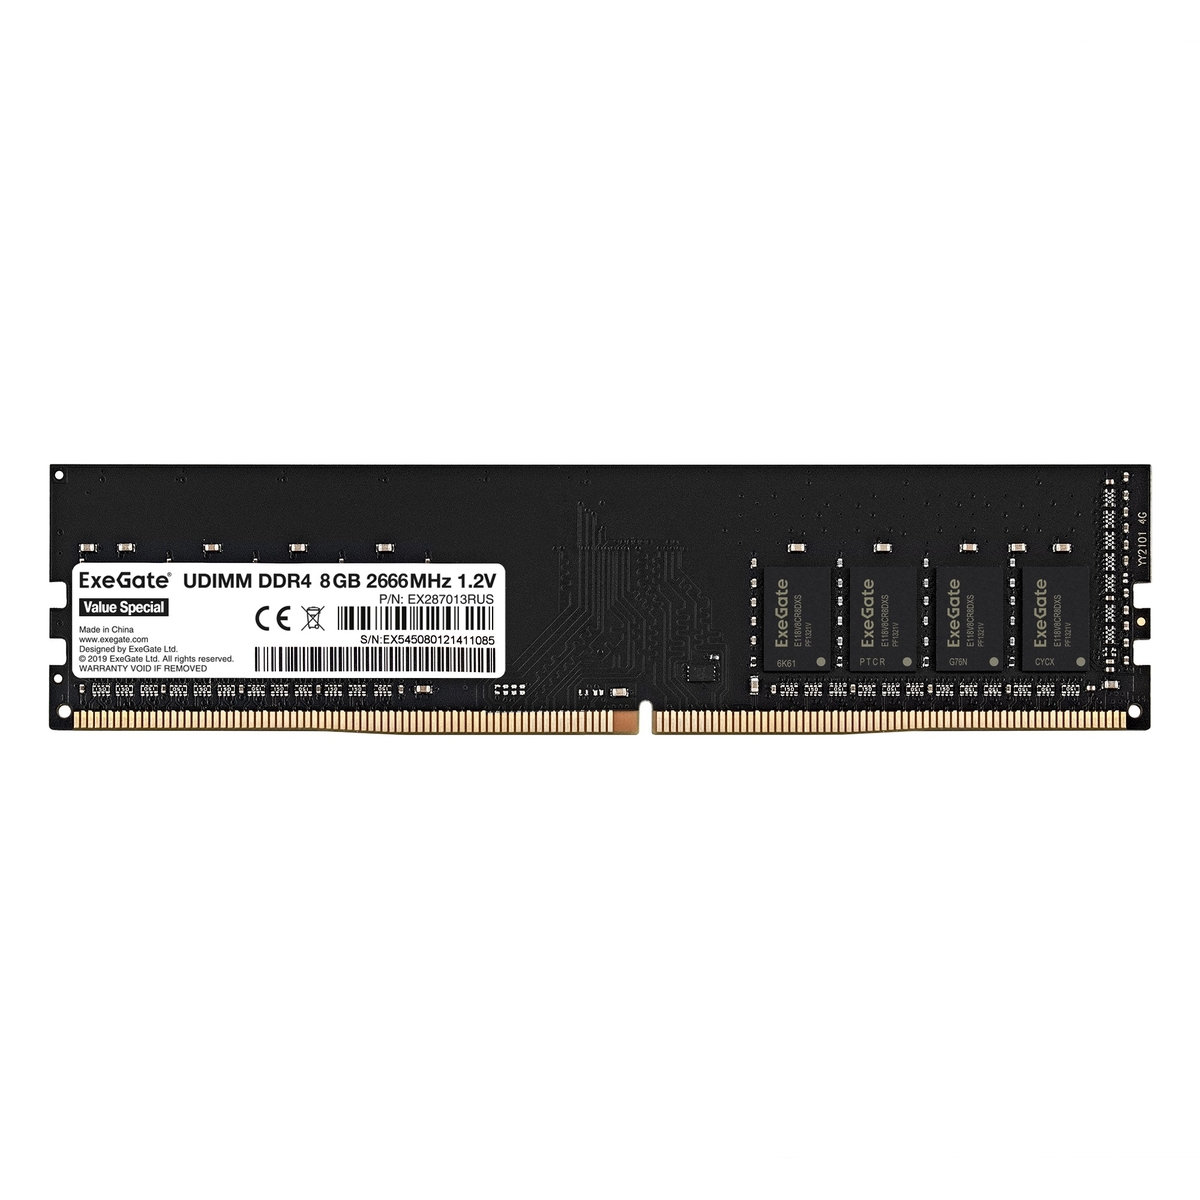 Память оперативная DDR4 ExeGate Value Special 8Gb 2666MHz pc-21300 (EX287013RUS) цена и фото